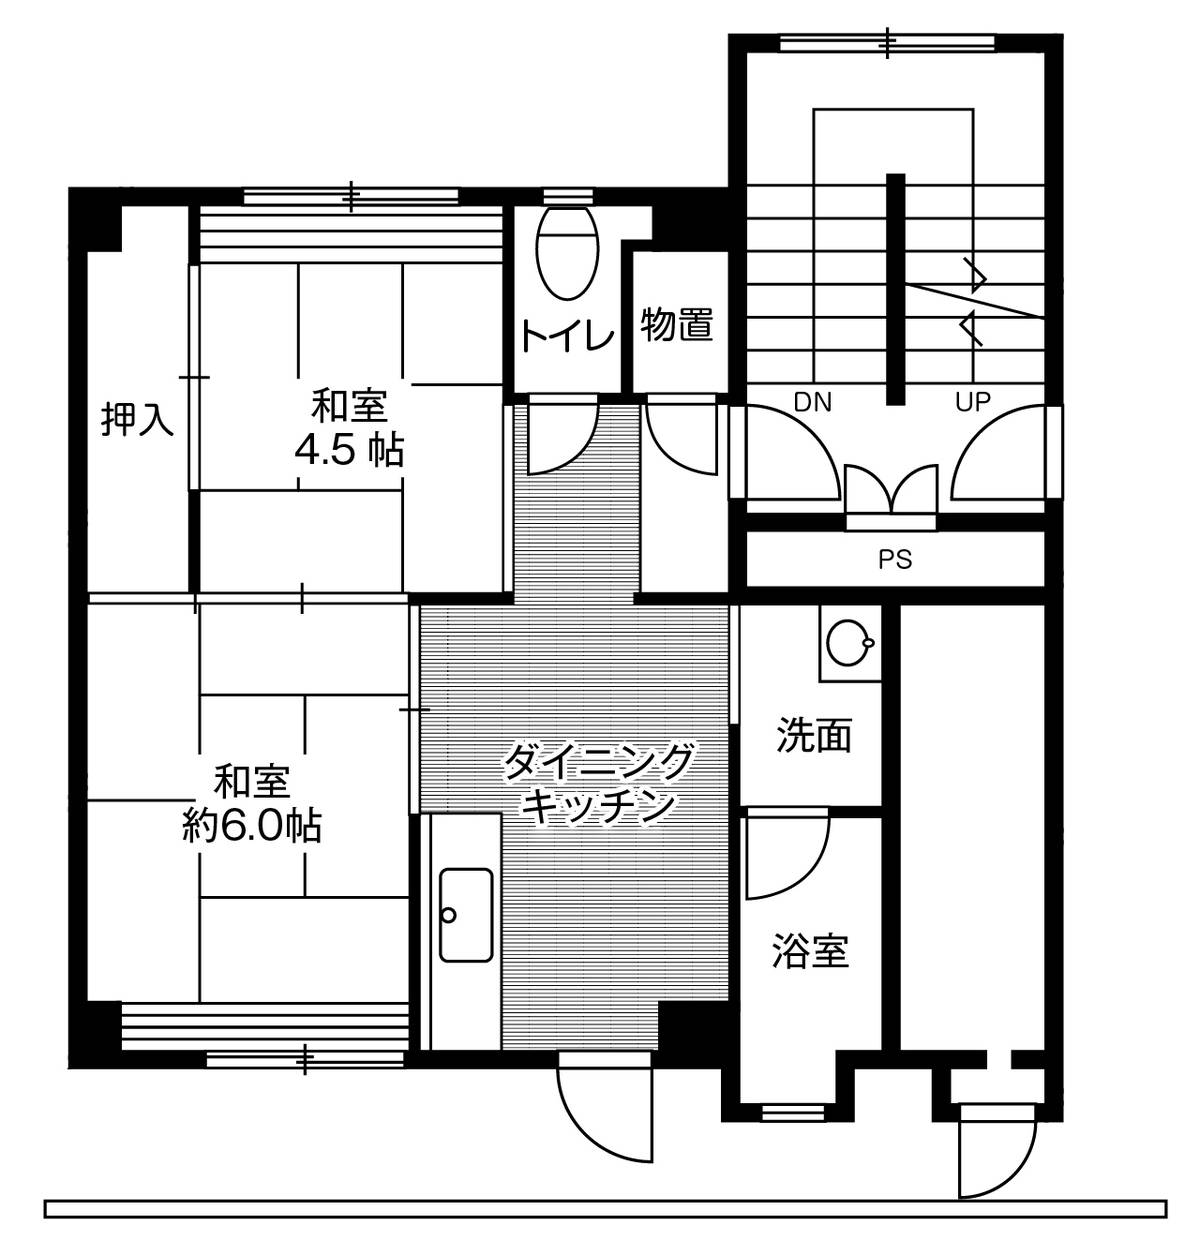 2DK floorplan of Village House Unshu Hirata in Izumo-shi